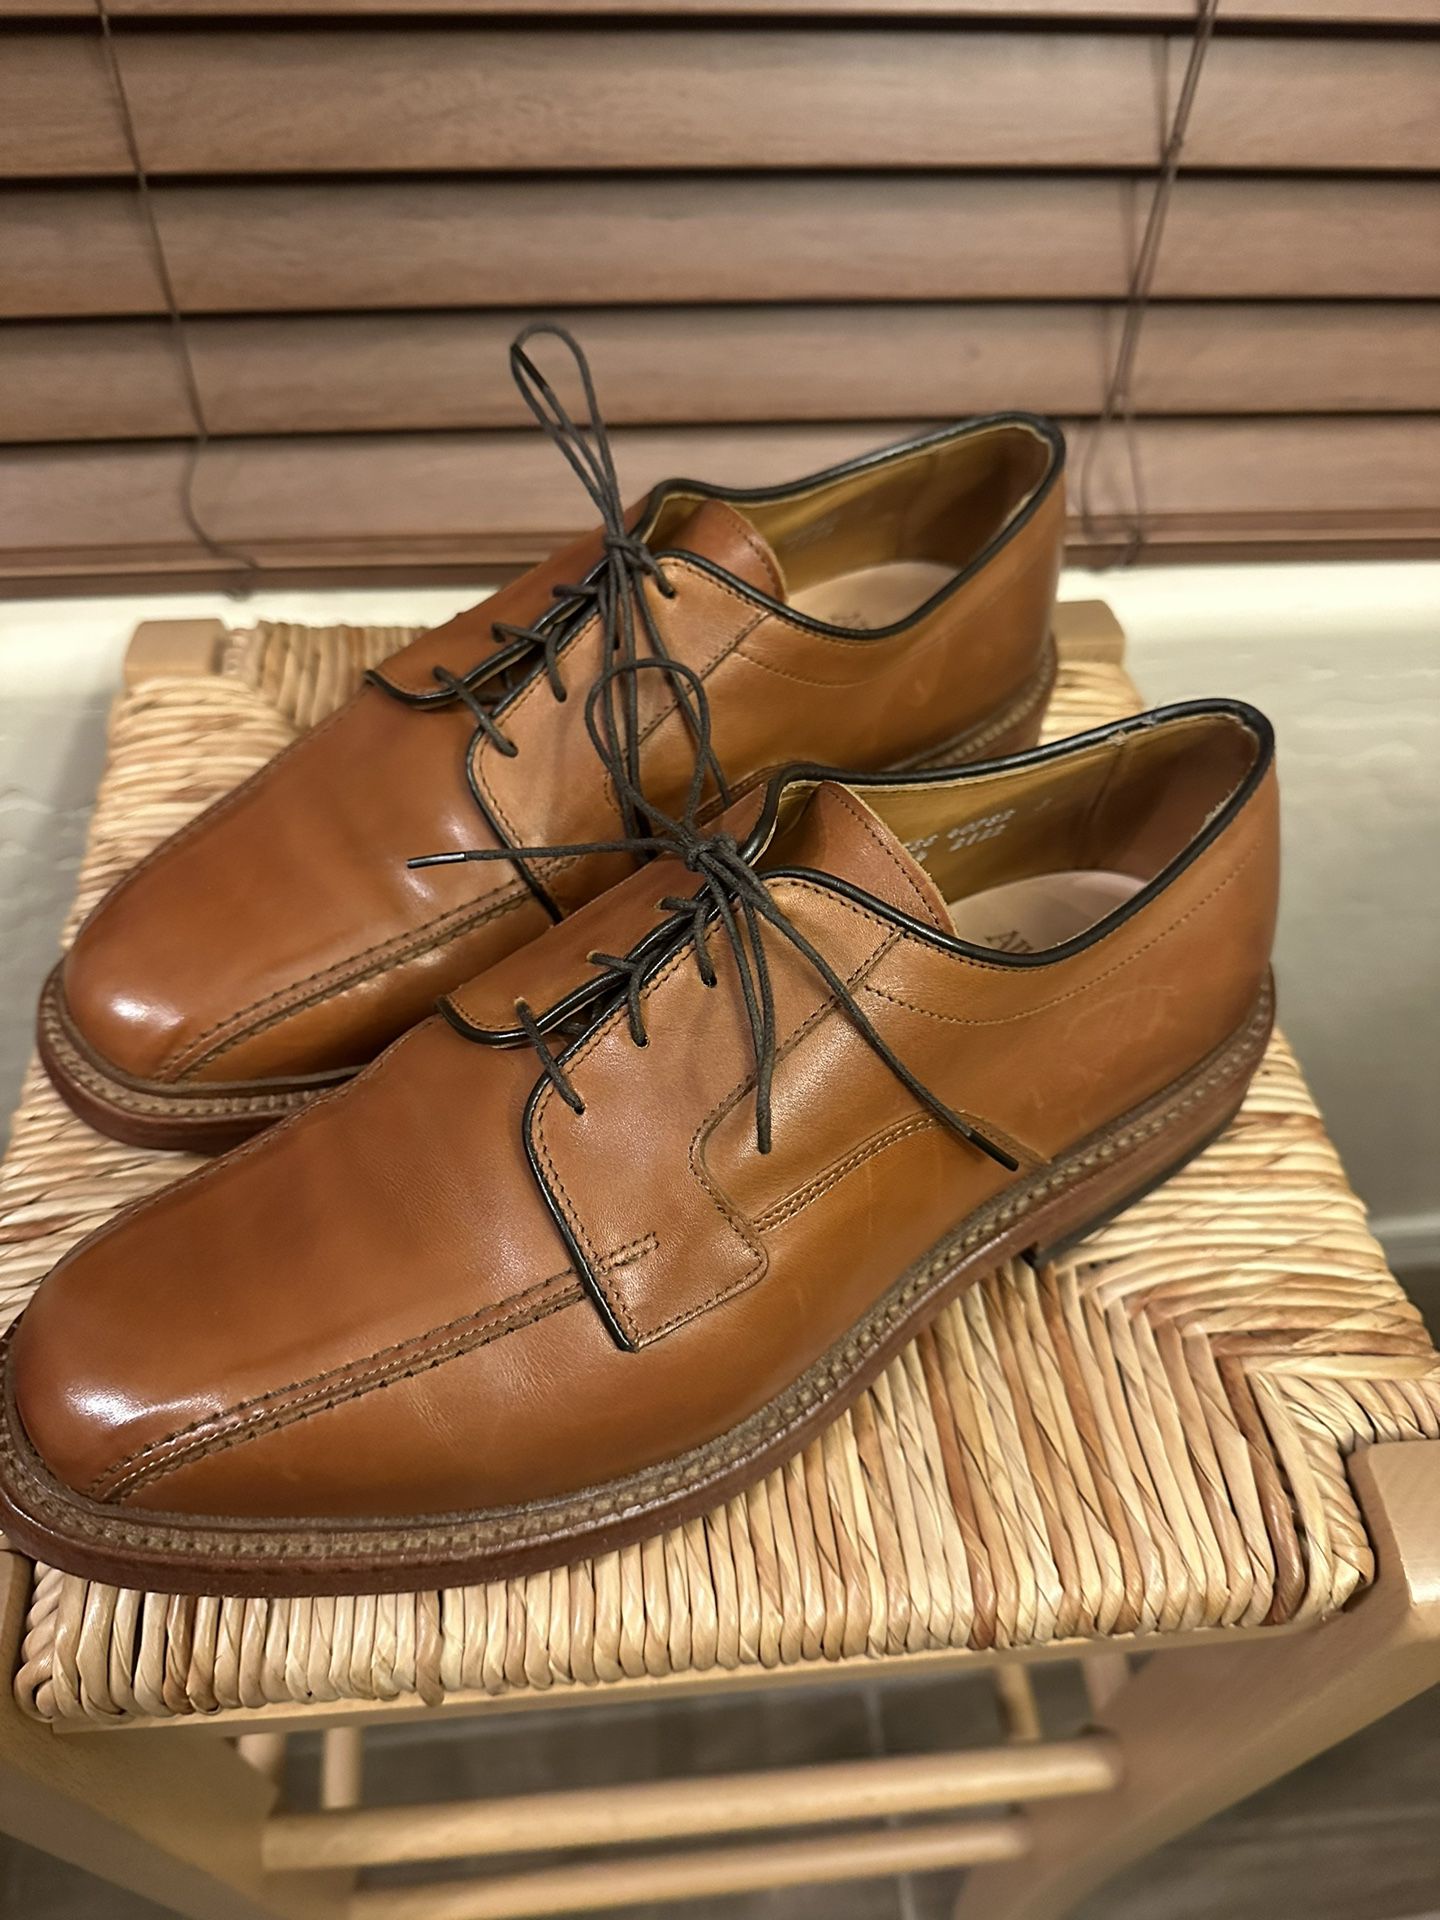 Allen Edmonds Size 8 Men's Dress Shoes. for Sale in Phoenix, AZ - OfferUp